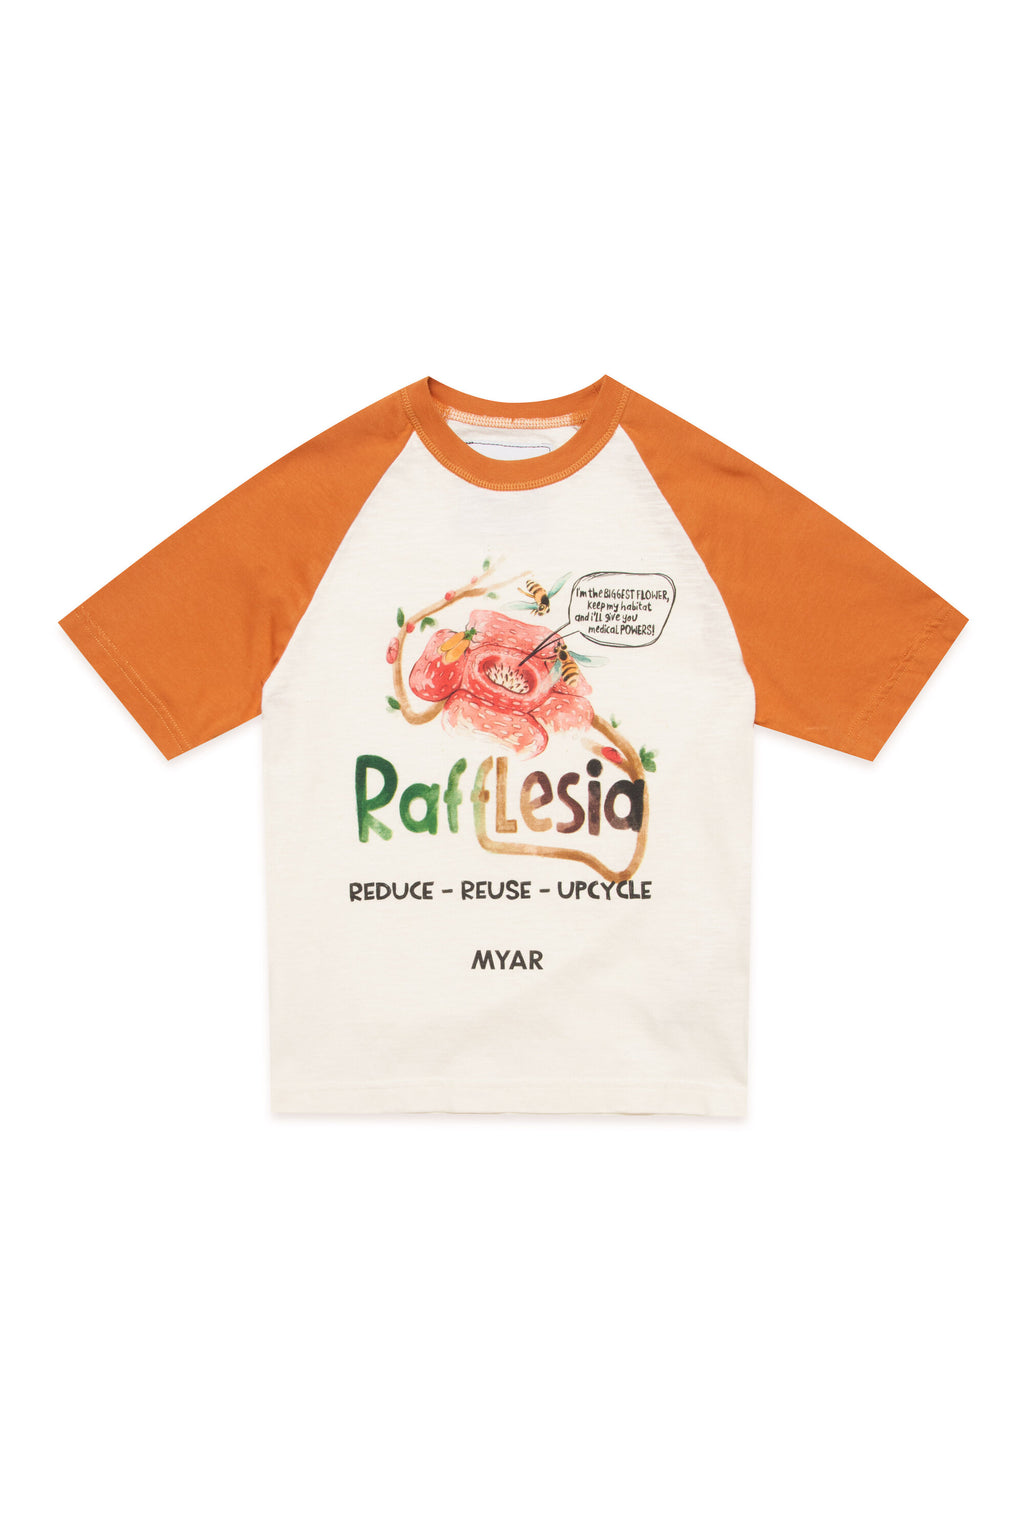 Two-tone white and orange deadstock fabric crew-neck T-shirt with Rafflesia digital print